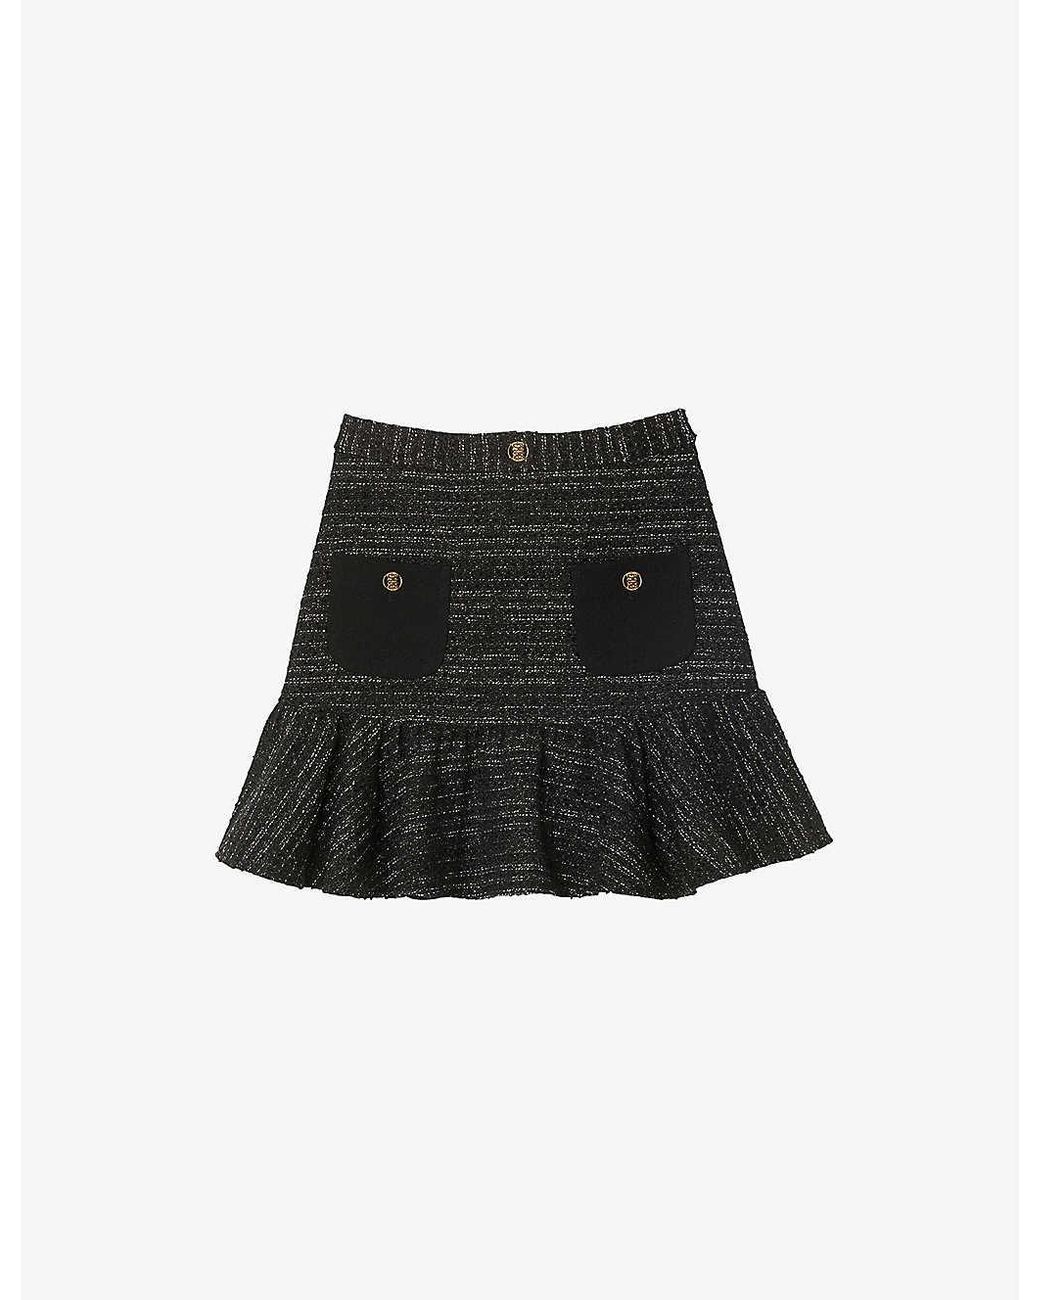 Sandro Mira Metallic Tweed Mini Skirt in Black | Lyst